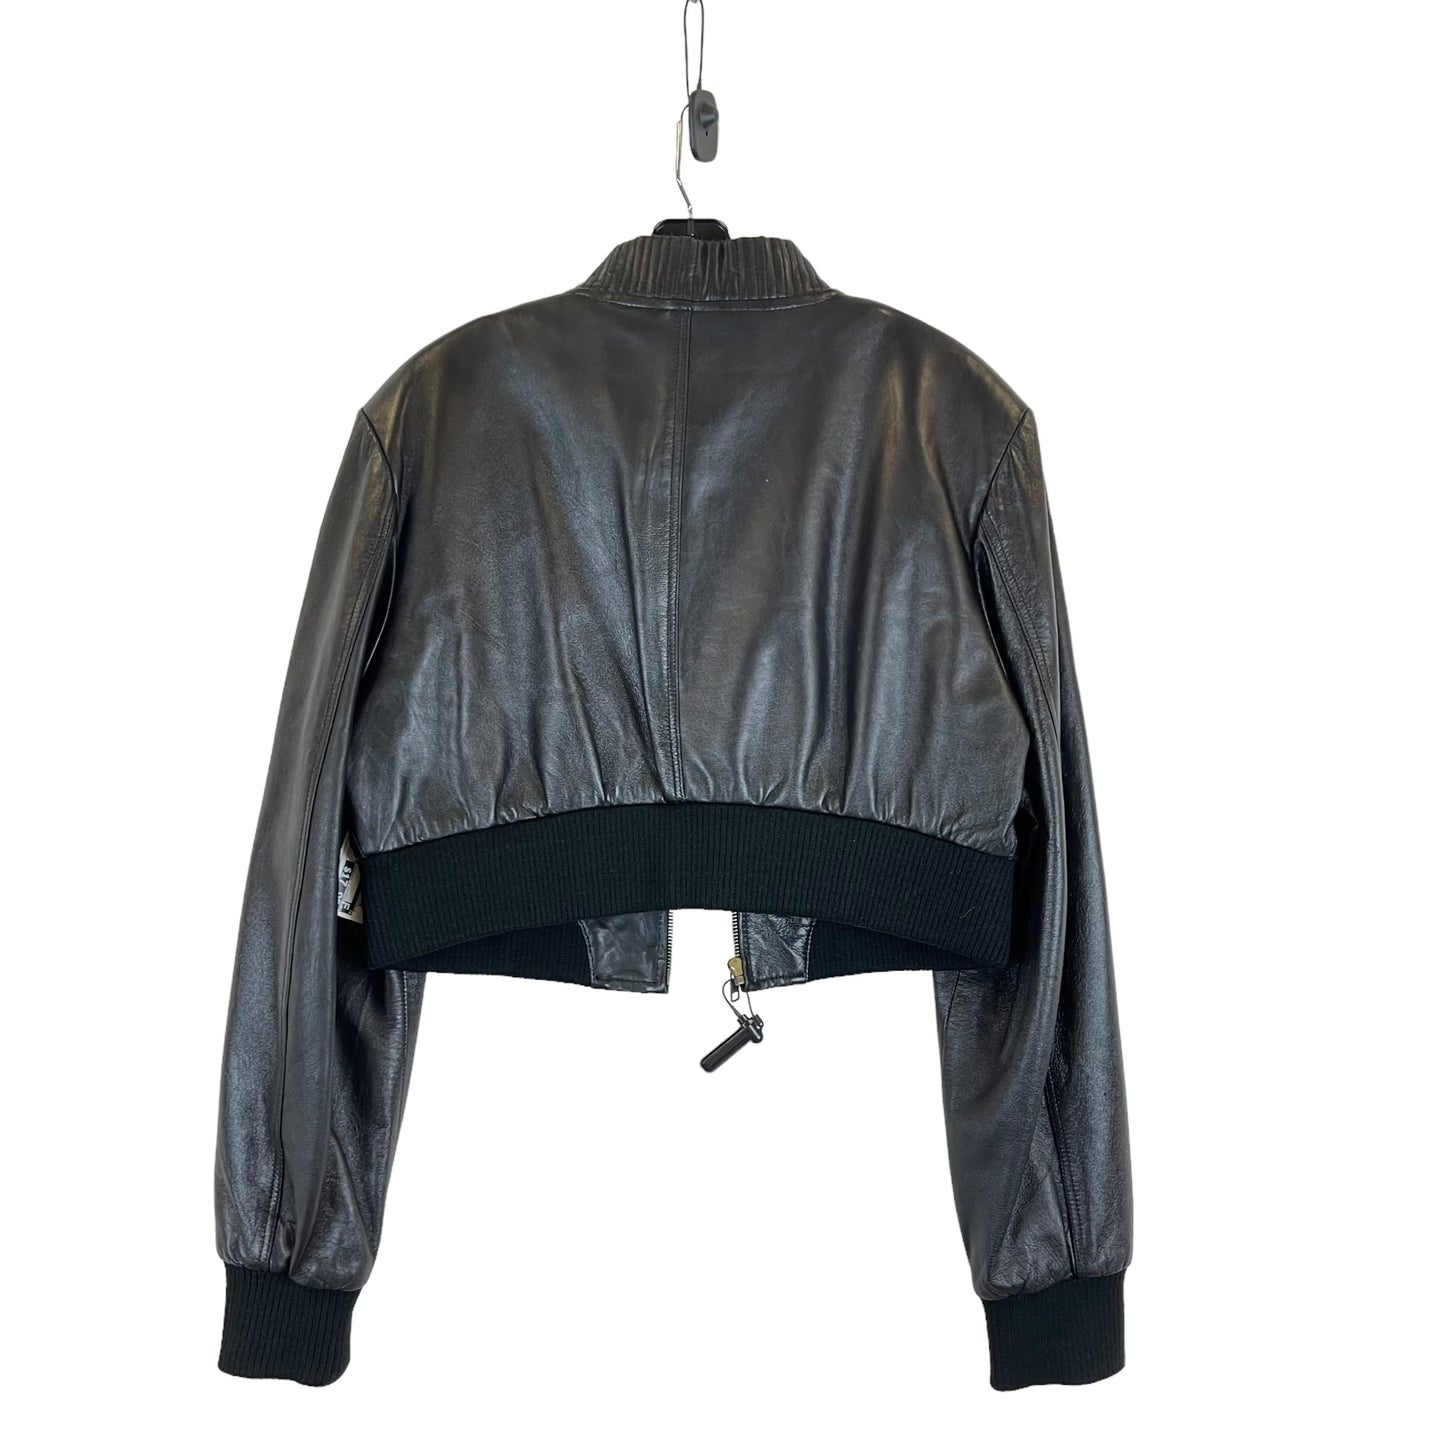 Jacket Other By The Leather Company Size: Xxxl